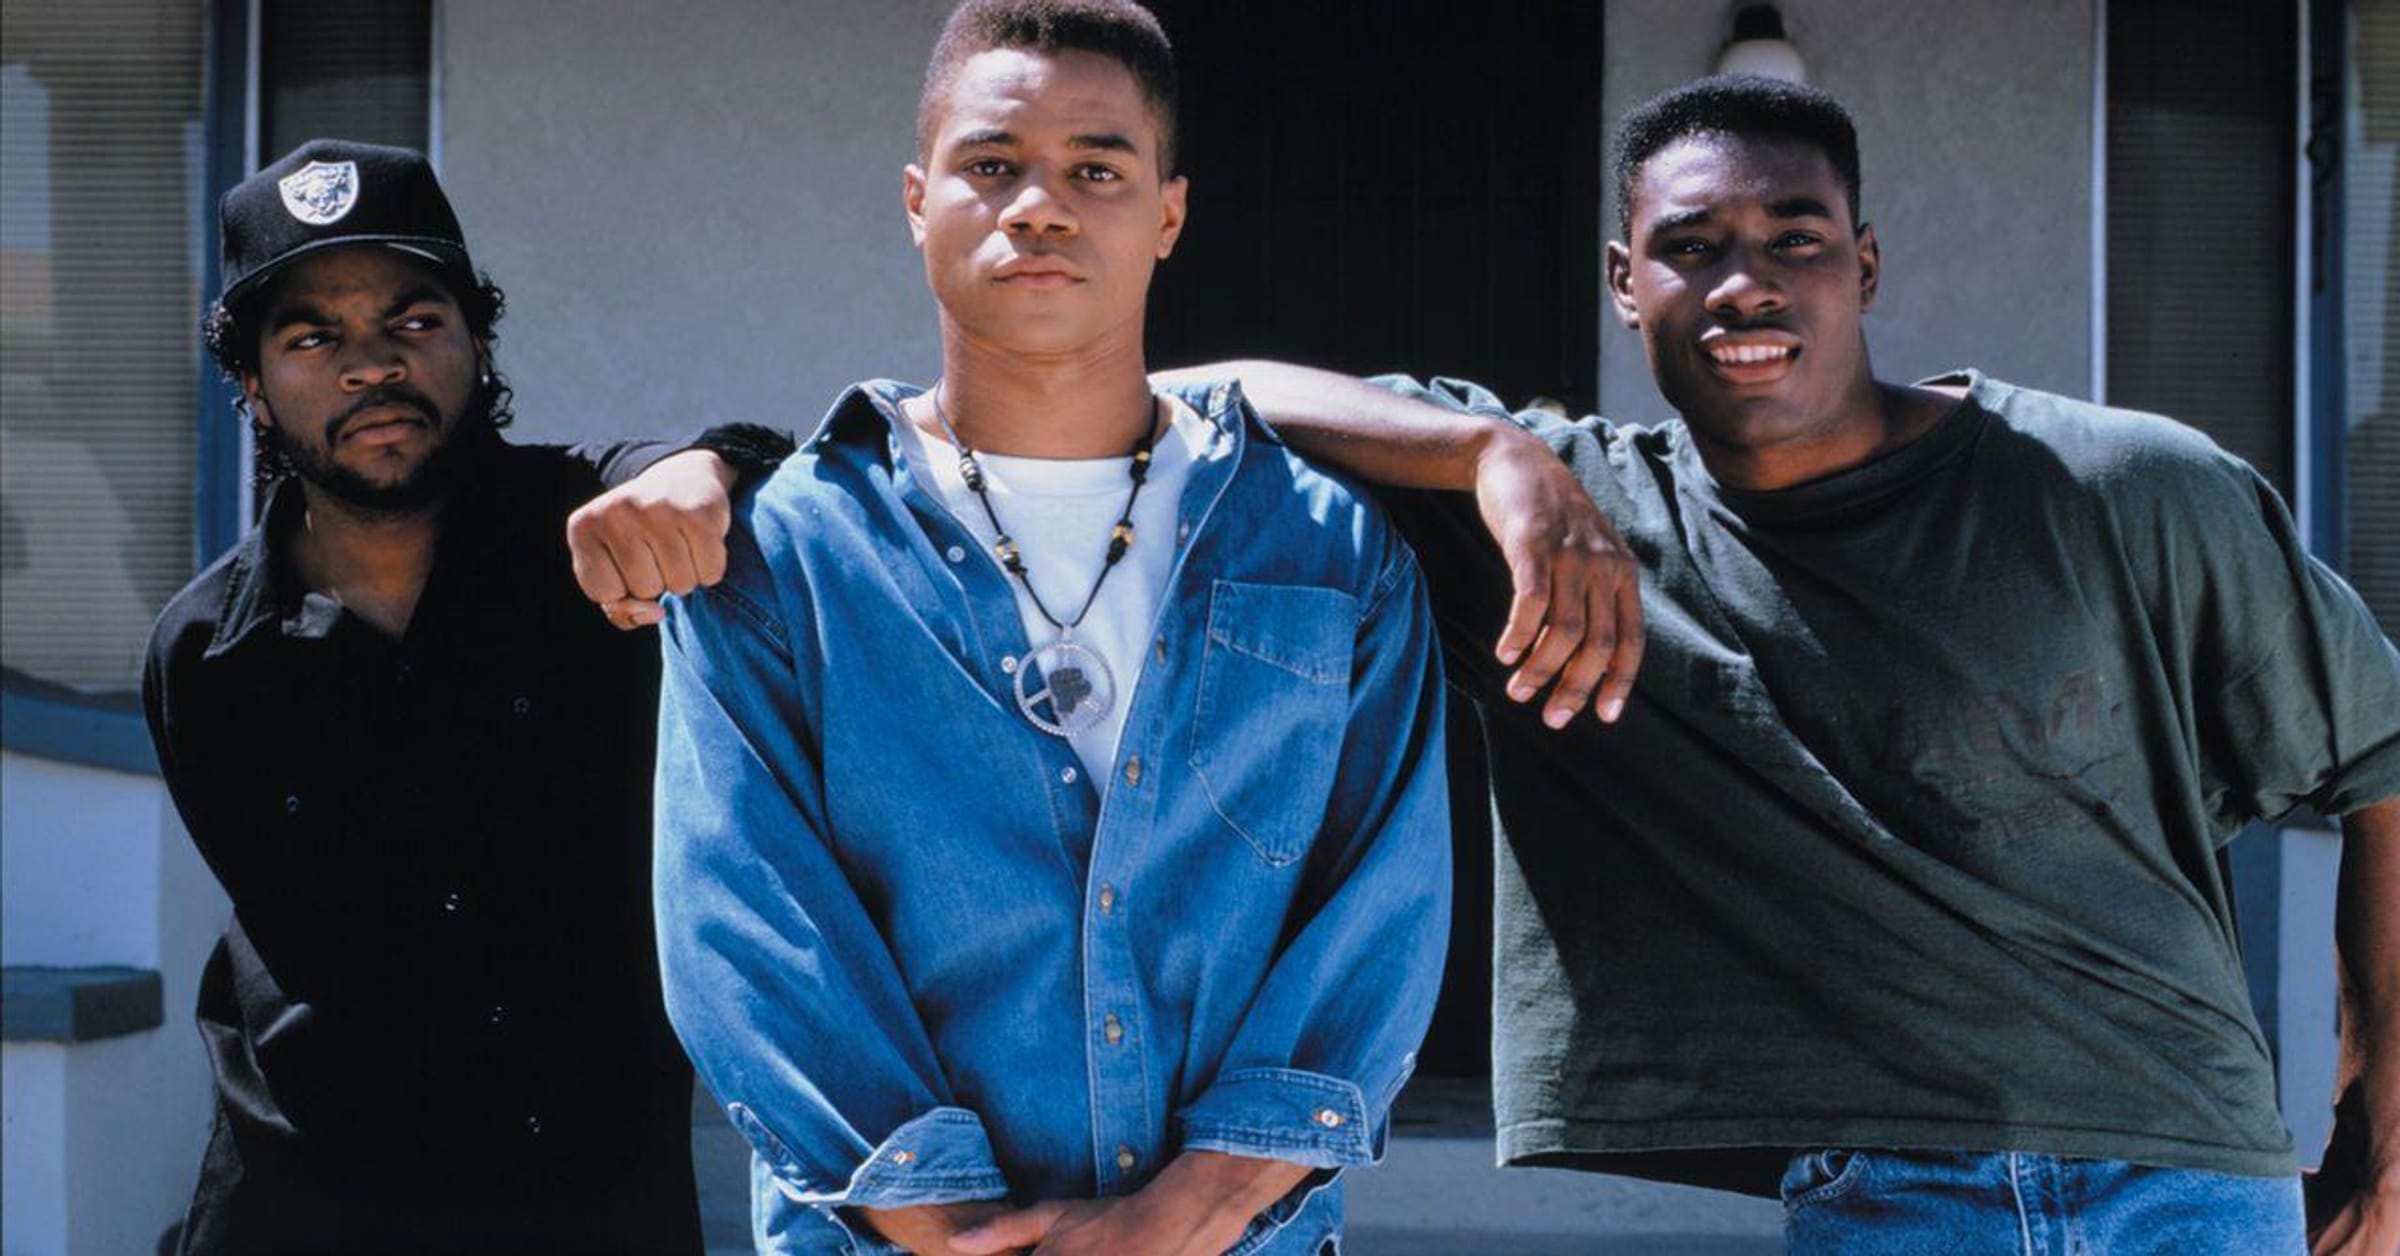 Ребята по соседству. Ребята с улицы (1991) Boyz n the Hood. Ребята с улицы 1991 Ice Cube. Айс Кьюб ребята с улицы.